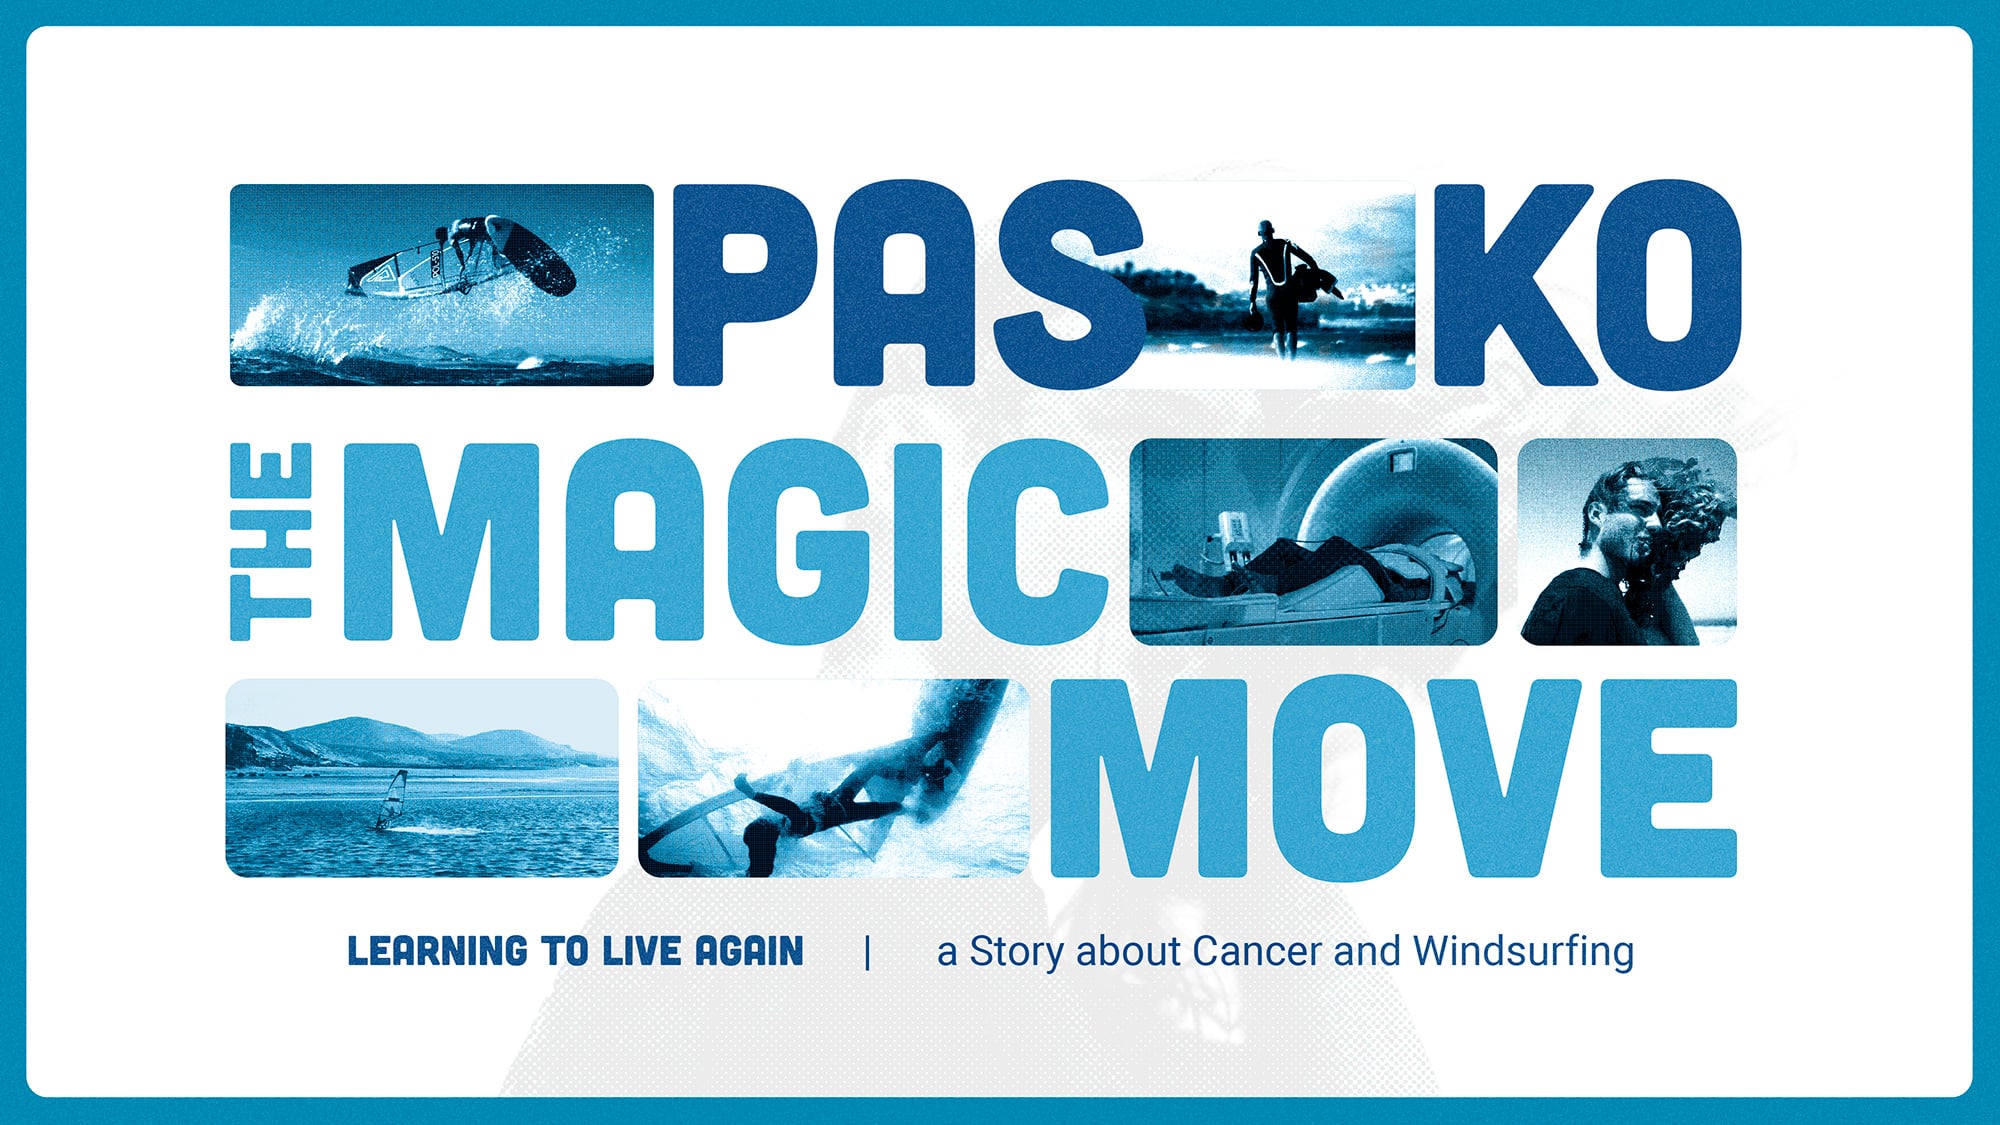 Pasko - The Magic Move